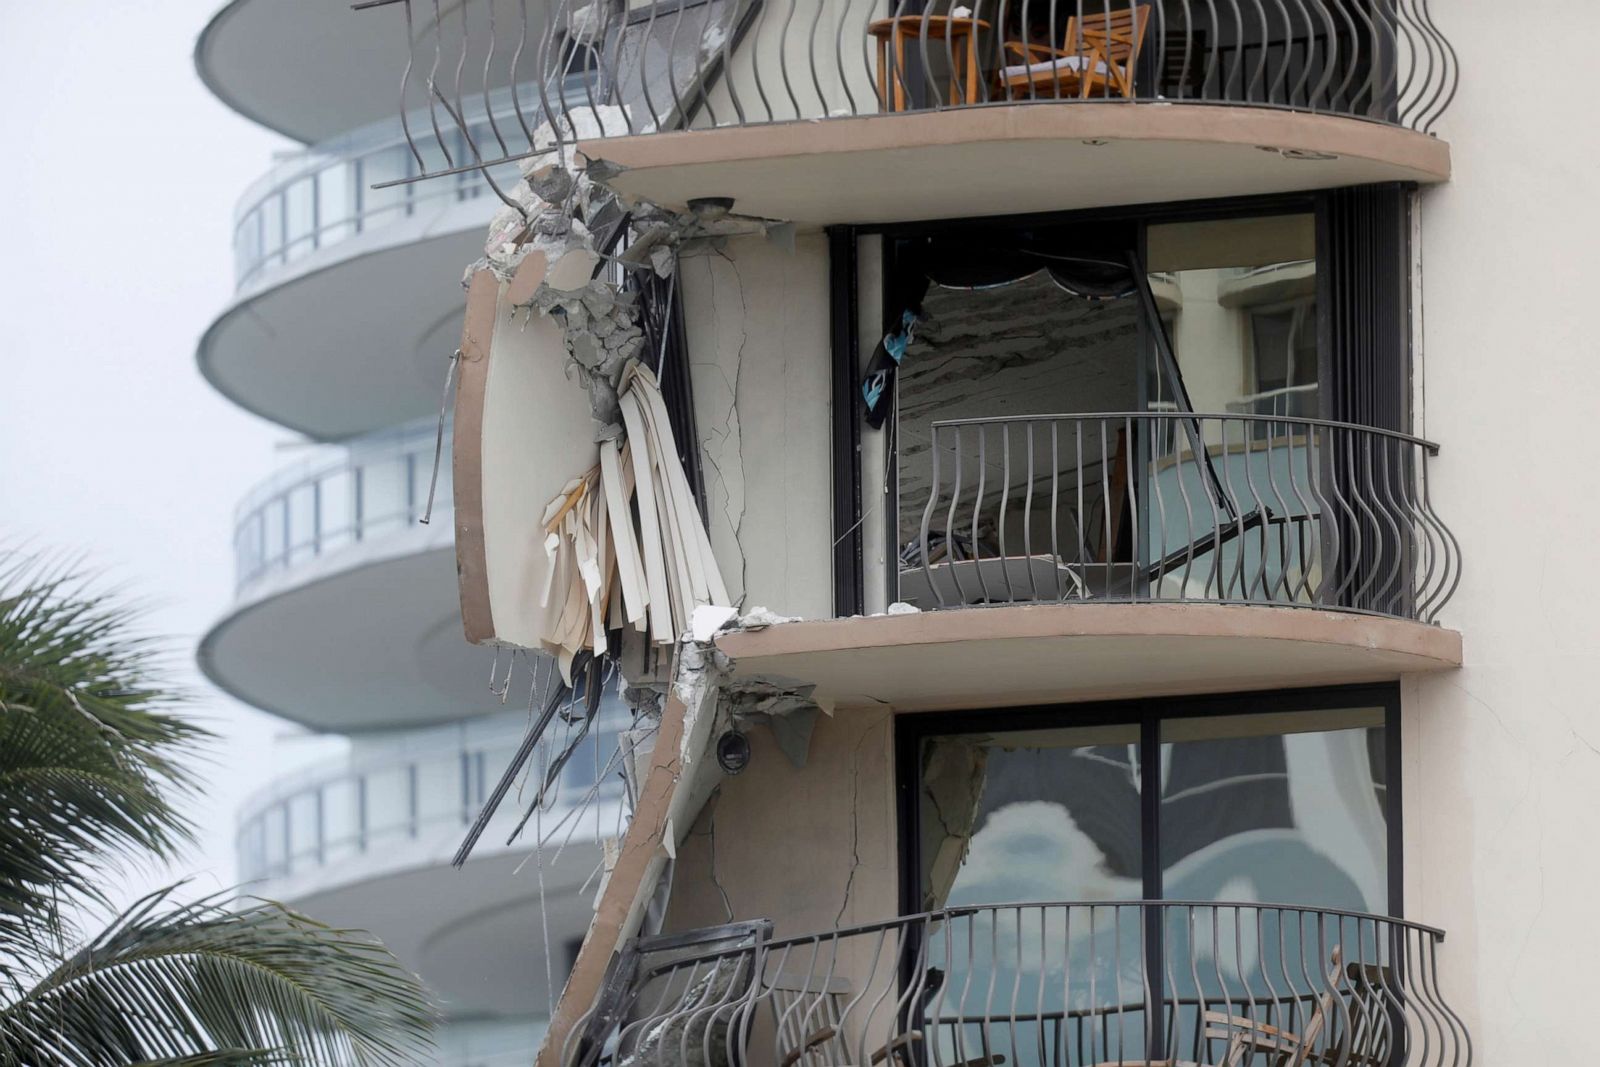 PHOTOS: Scores missing after Florida building collapse Photos - ABC News